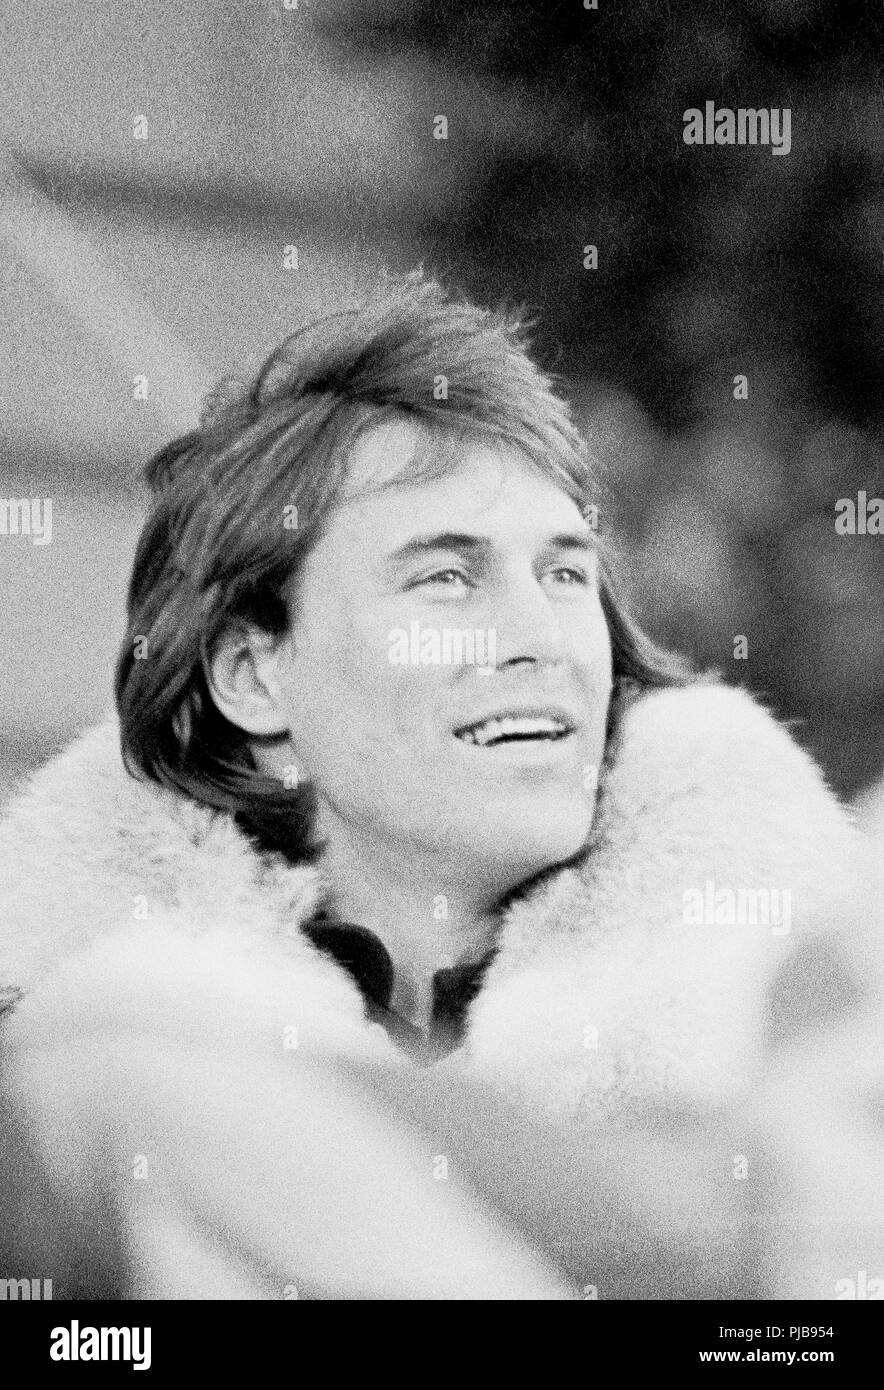 Dwight Clark, San Francisco 49ers equipo de fútbol receptor ancho, 1980 Foto de stock